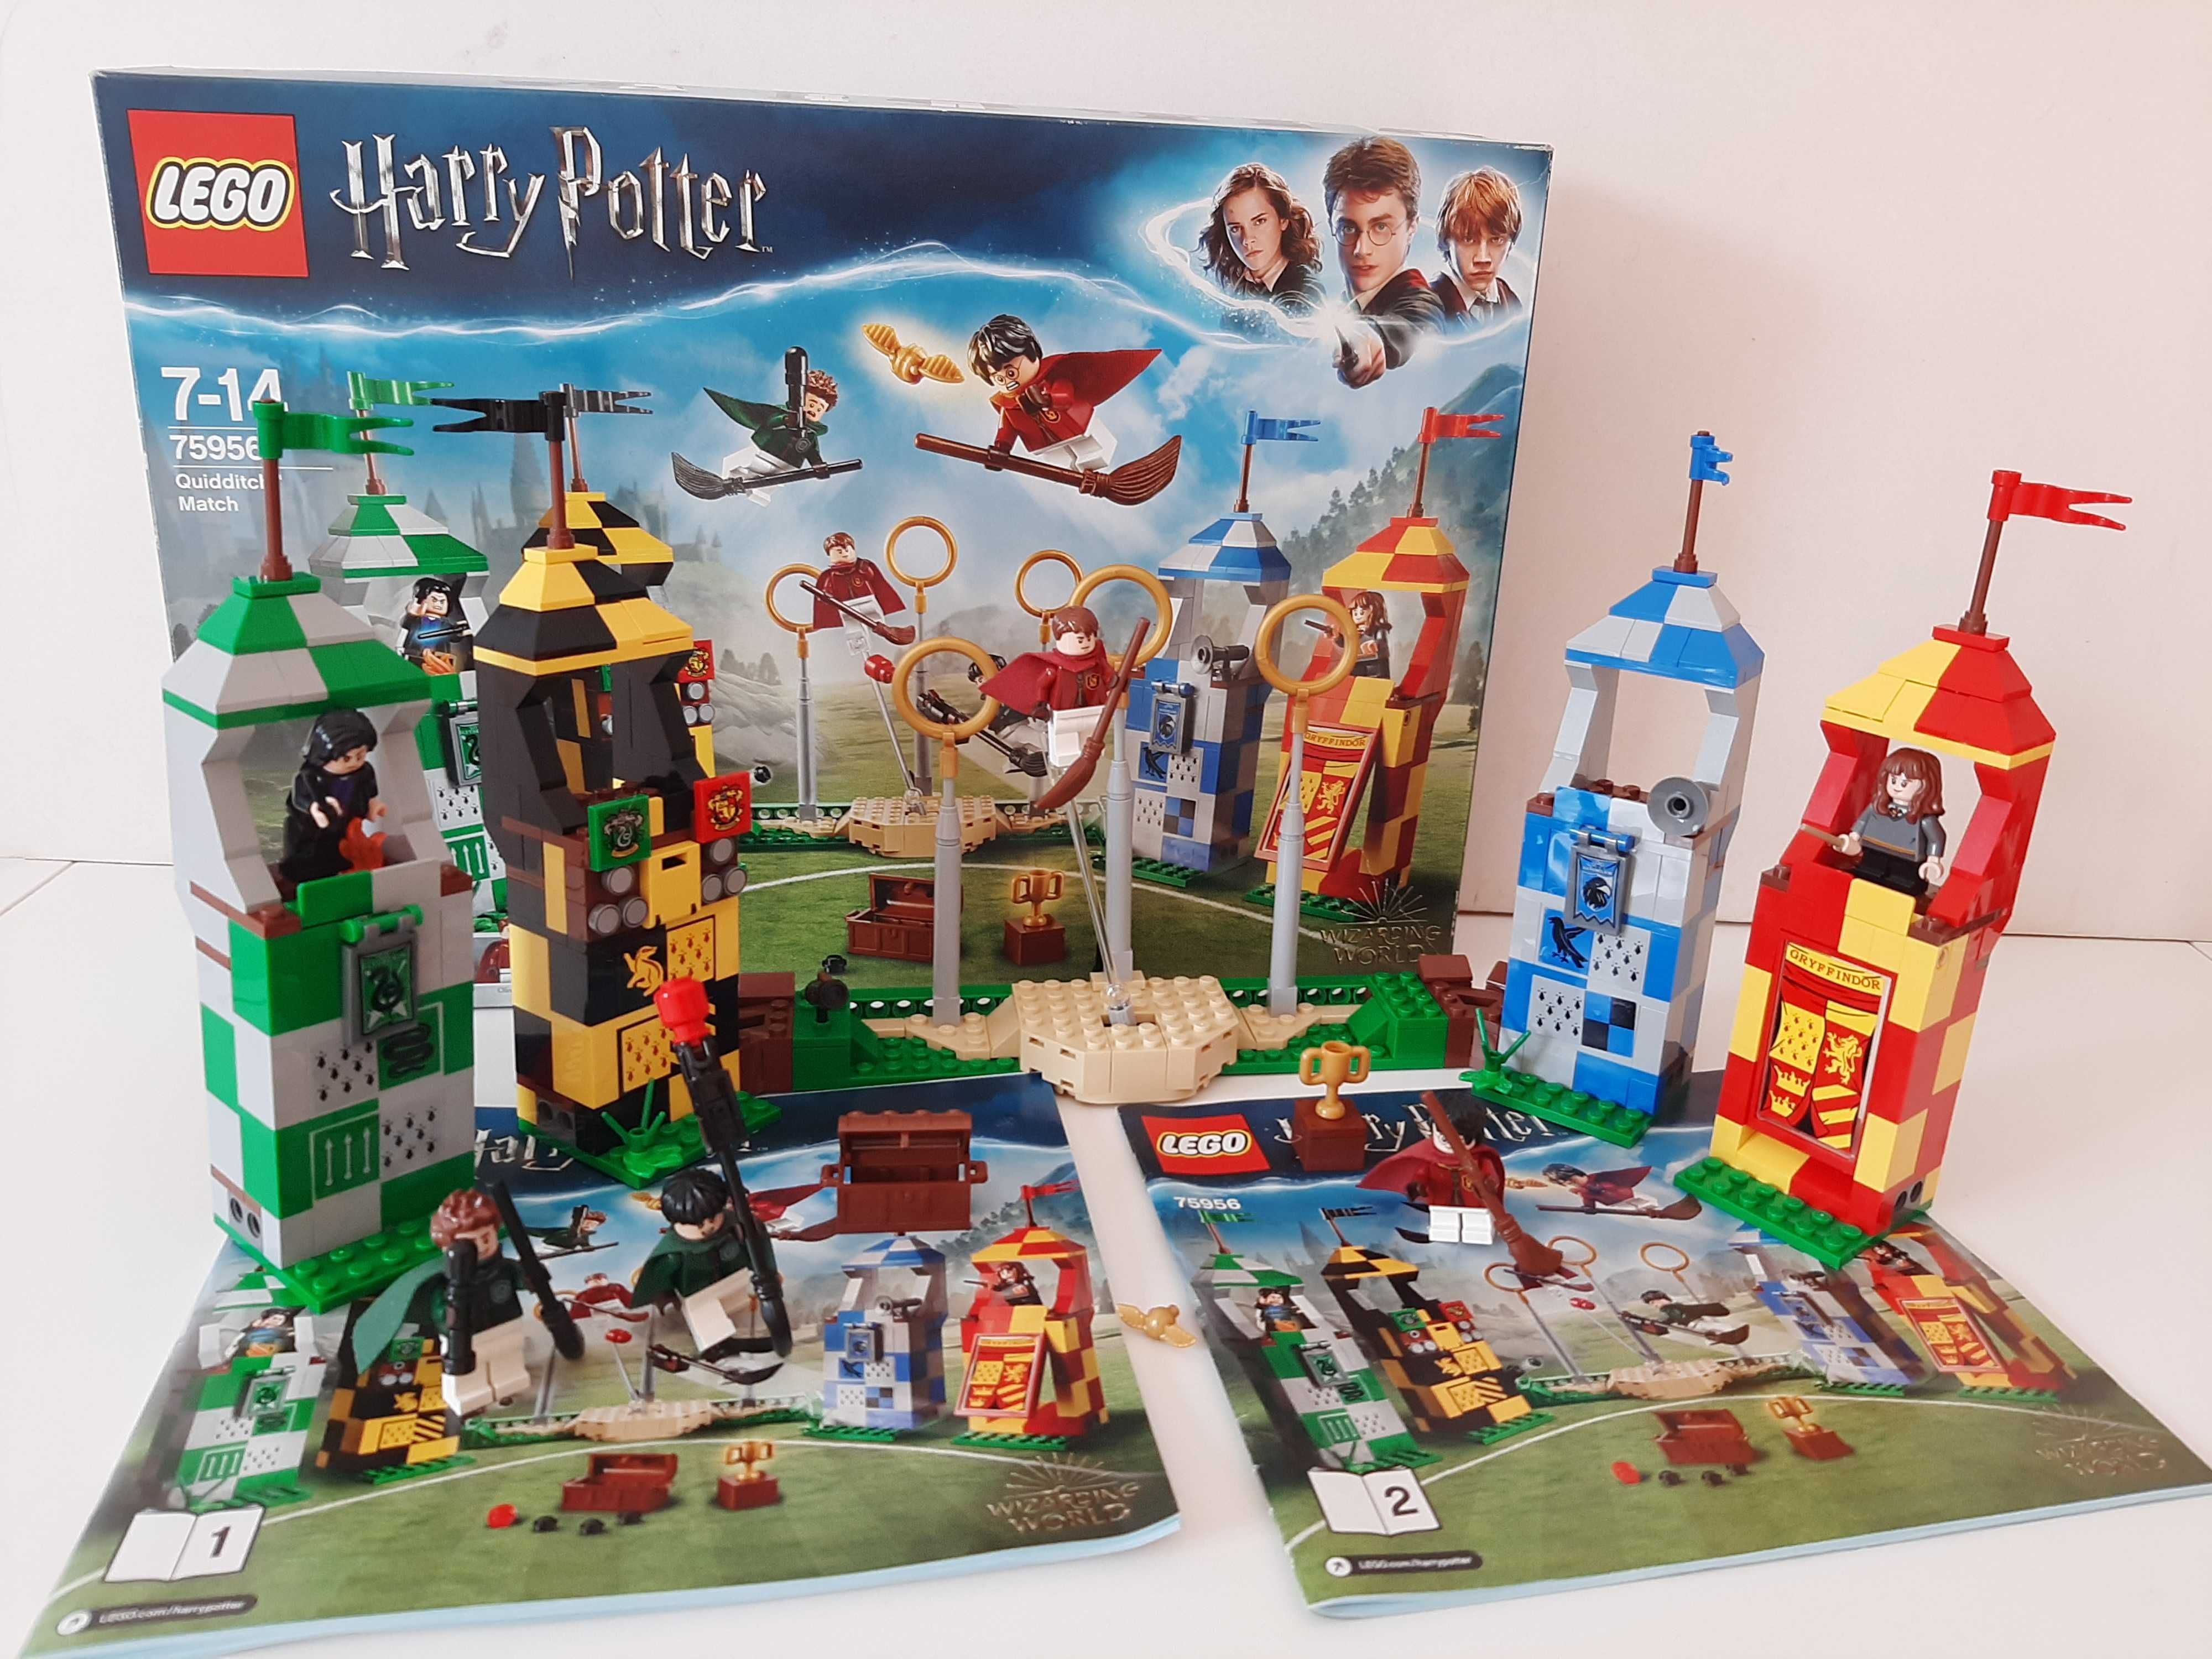 Lego Harry Potter 75956 Quidditch™ Match